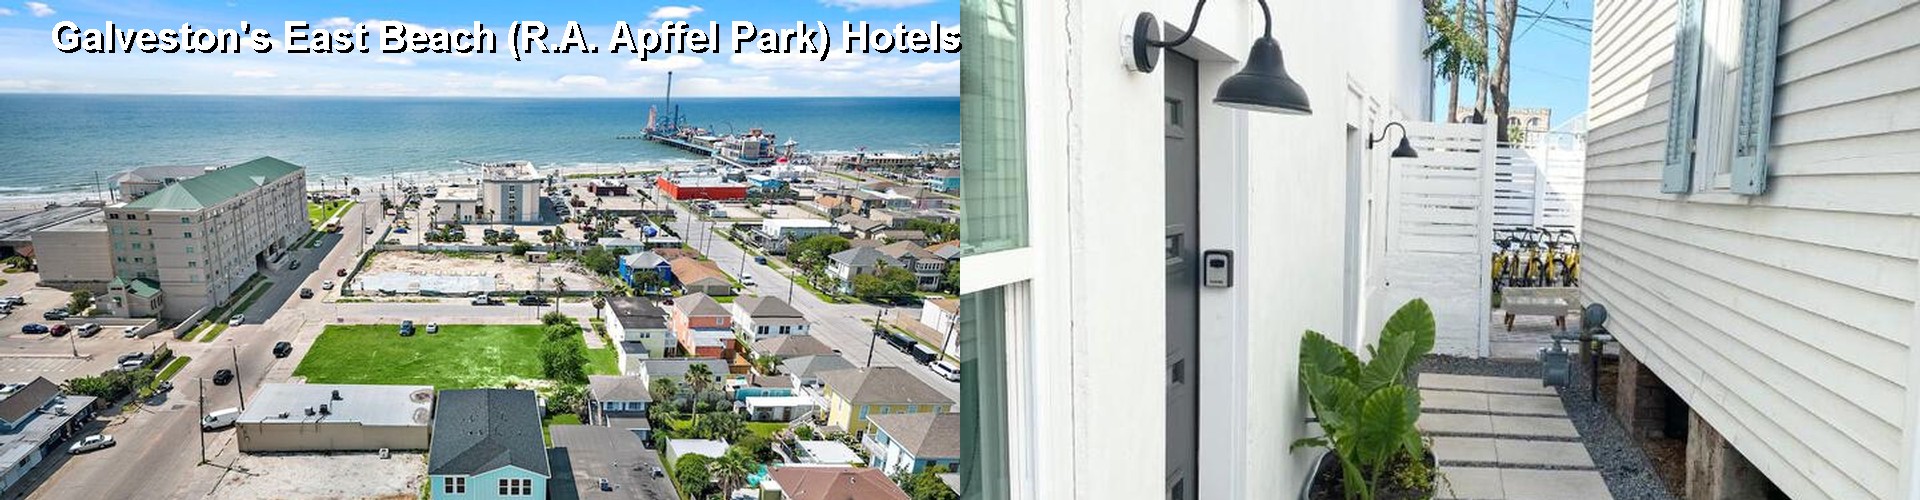 5 Best Hotels near Galveston's East Beach (R.A. Apffel Park)